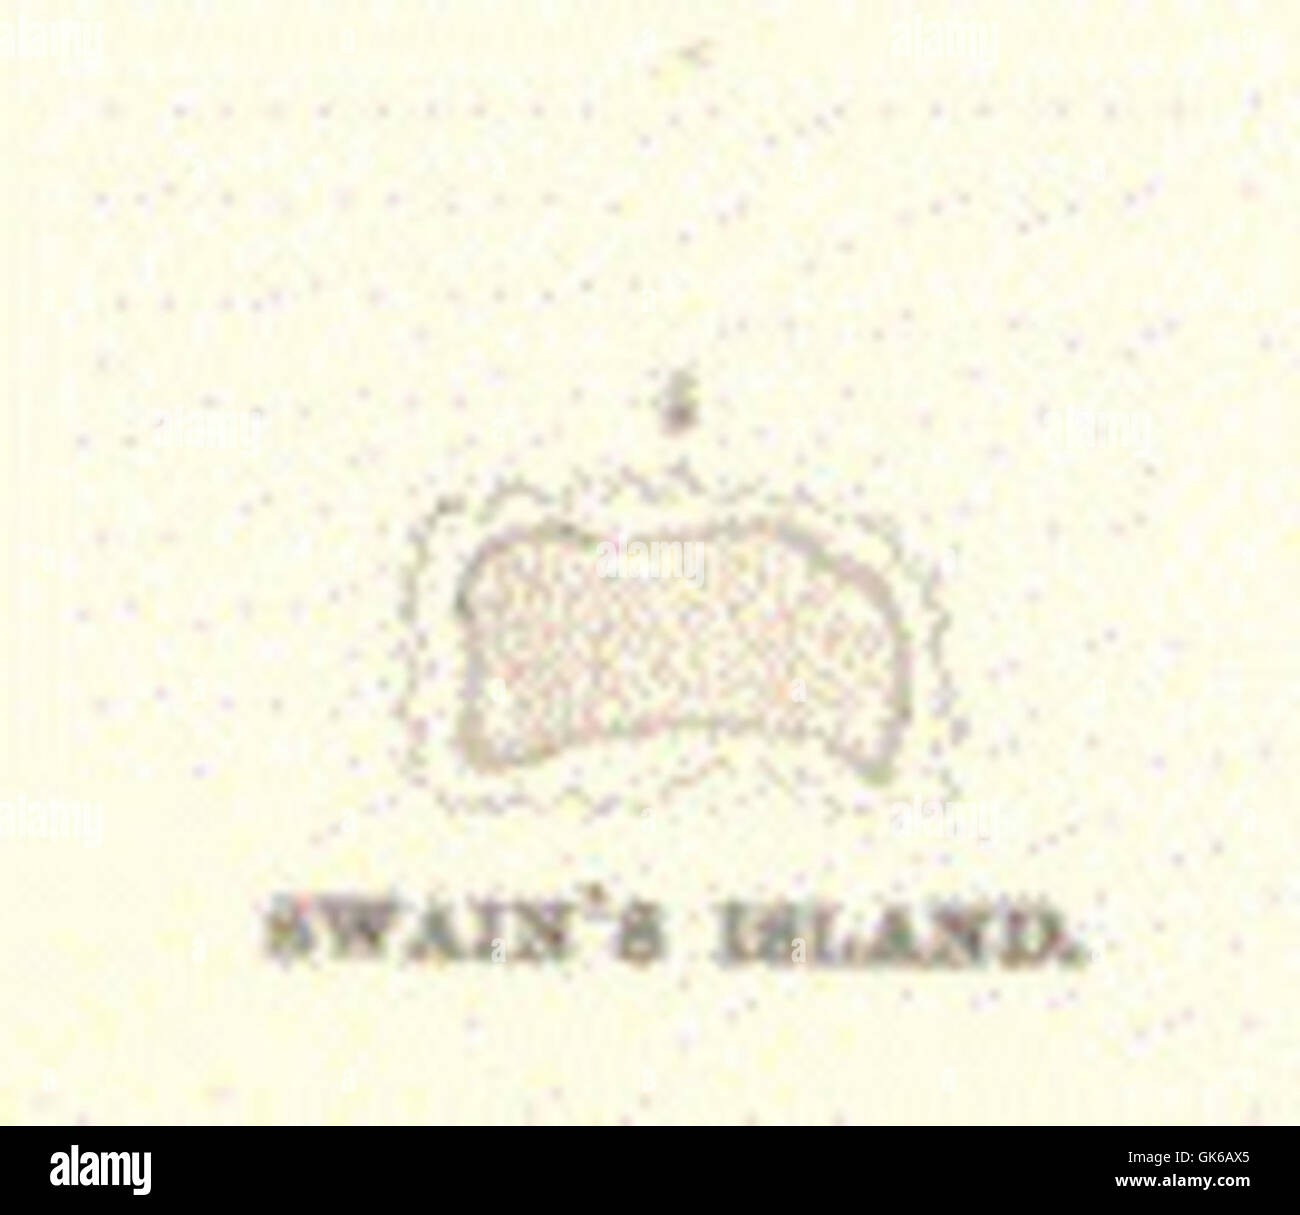 53010 Swain's Island Stock Photo